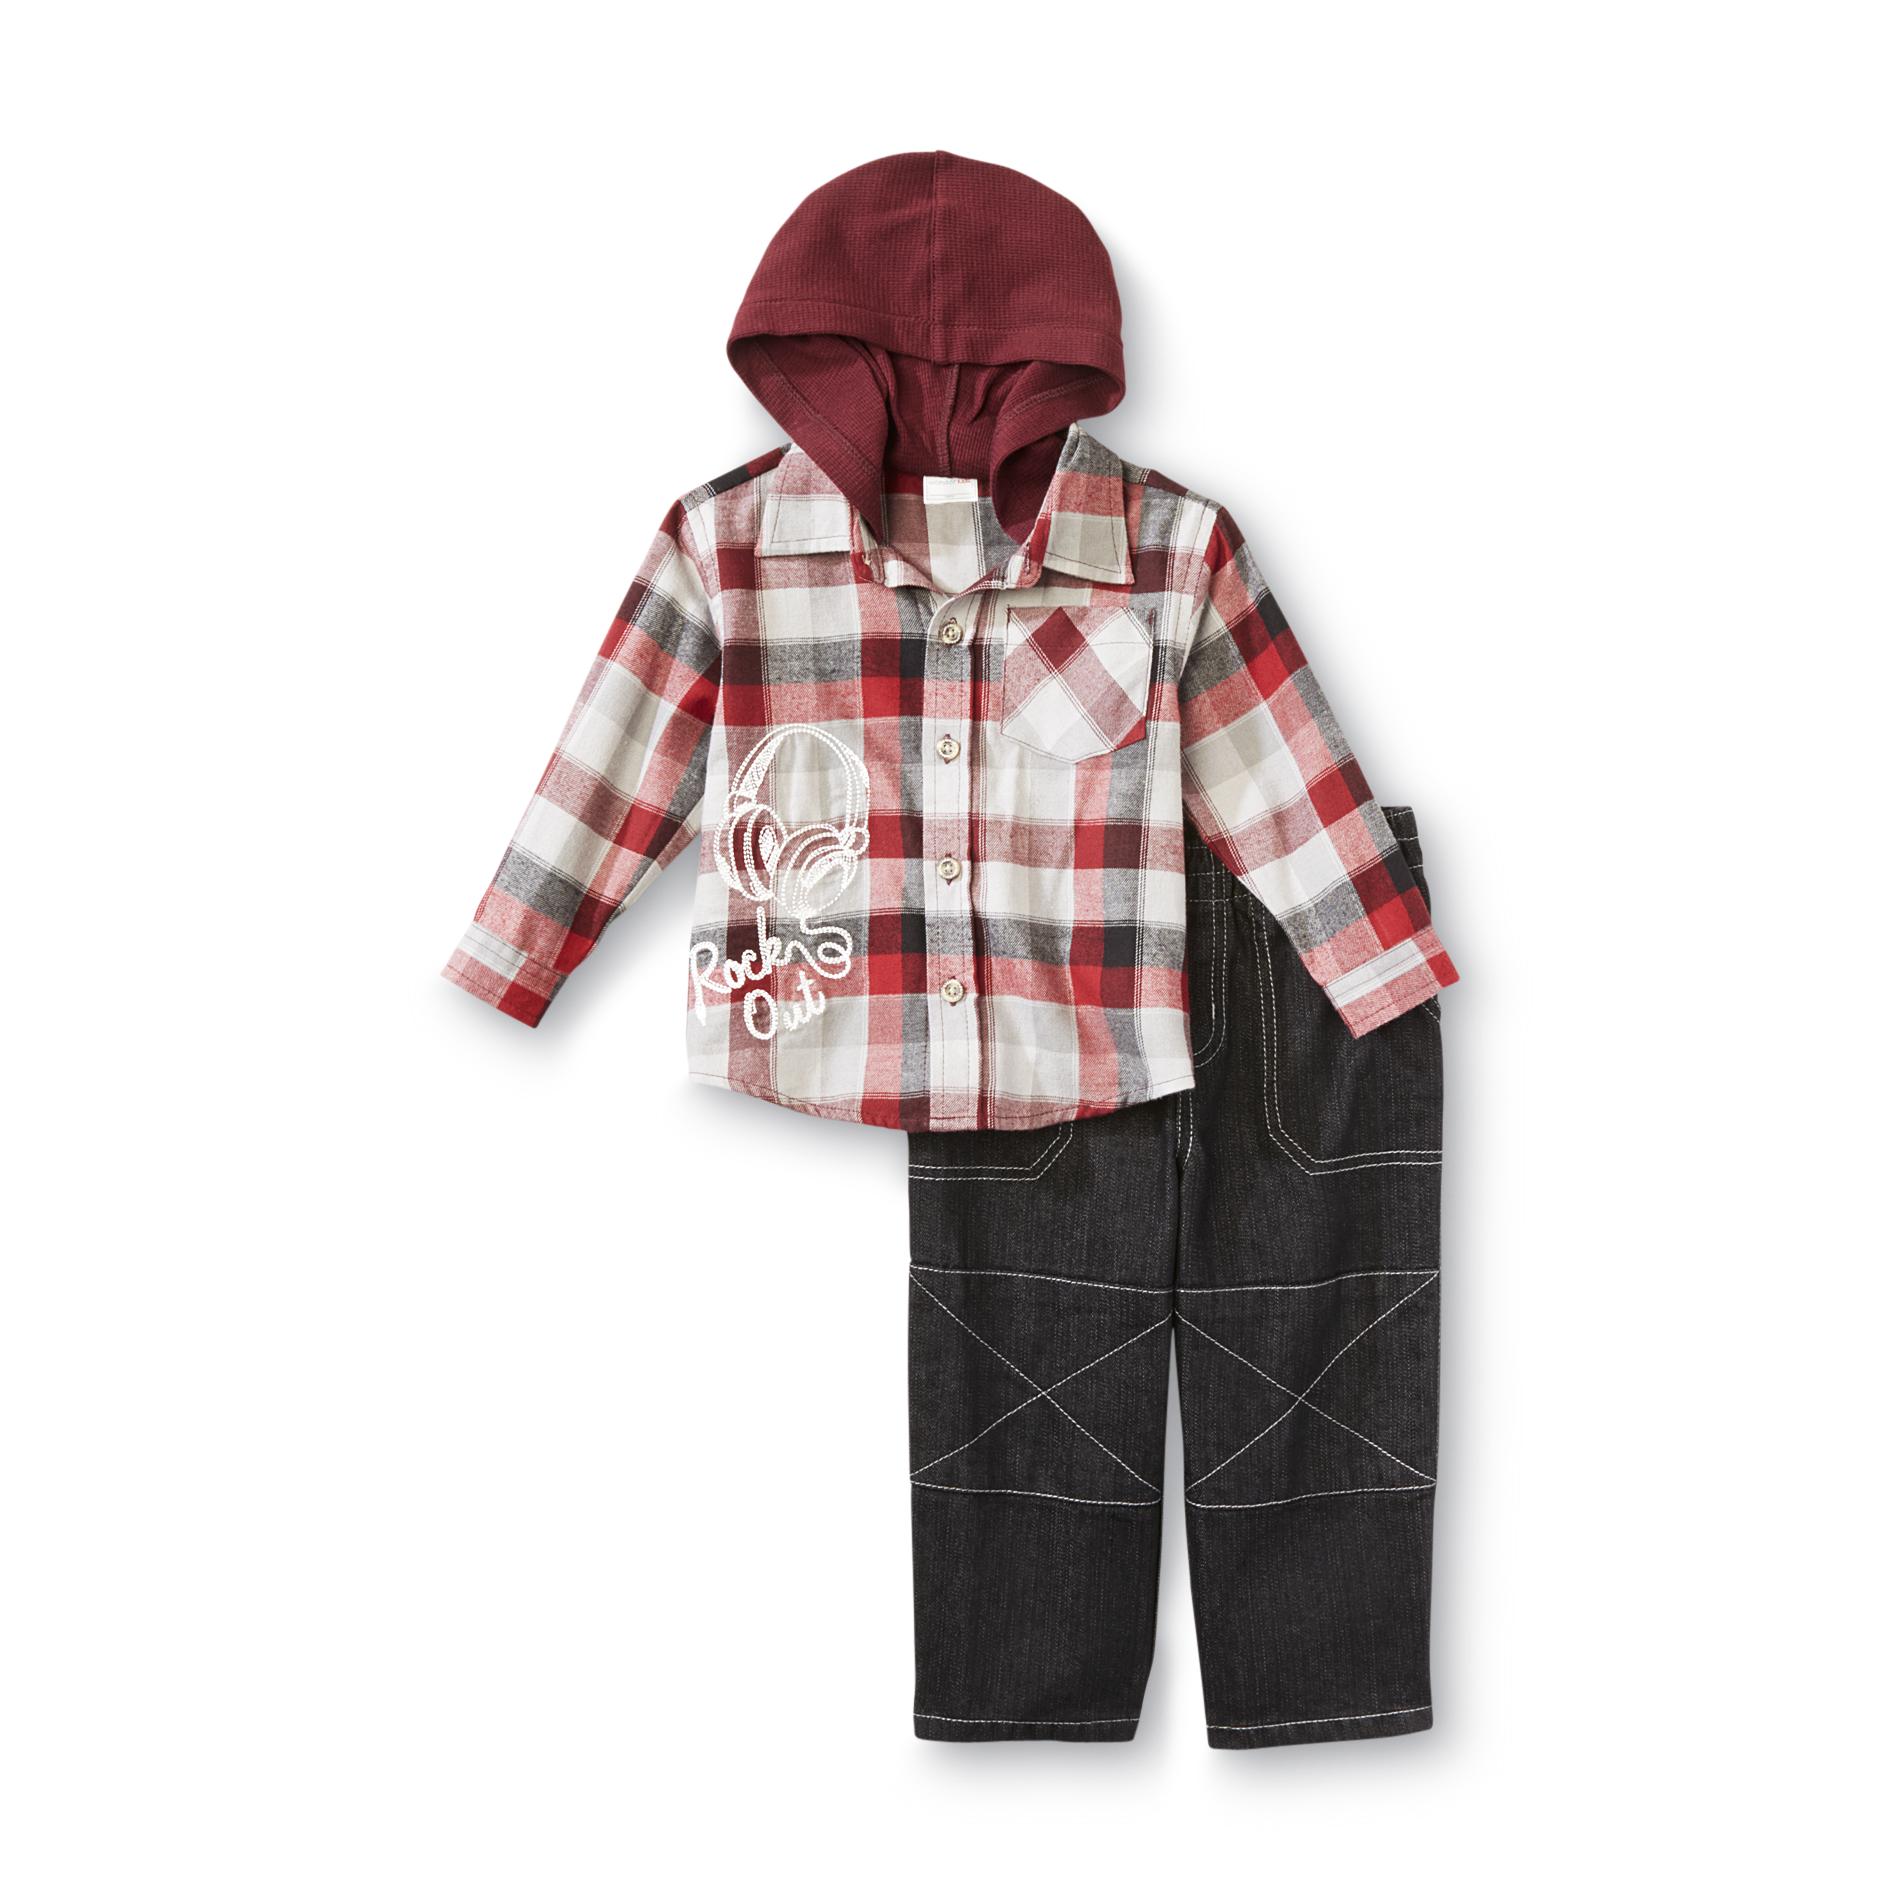 WonderKids Infant & Toddler Boy's Hooded Flannel Shirt & Jeans - Rock Out